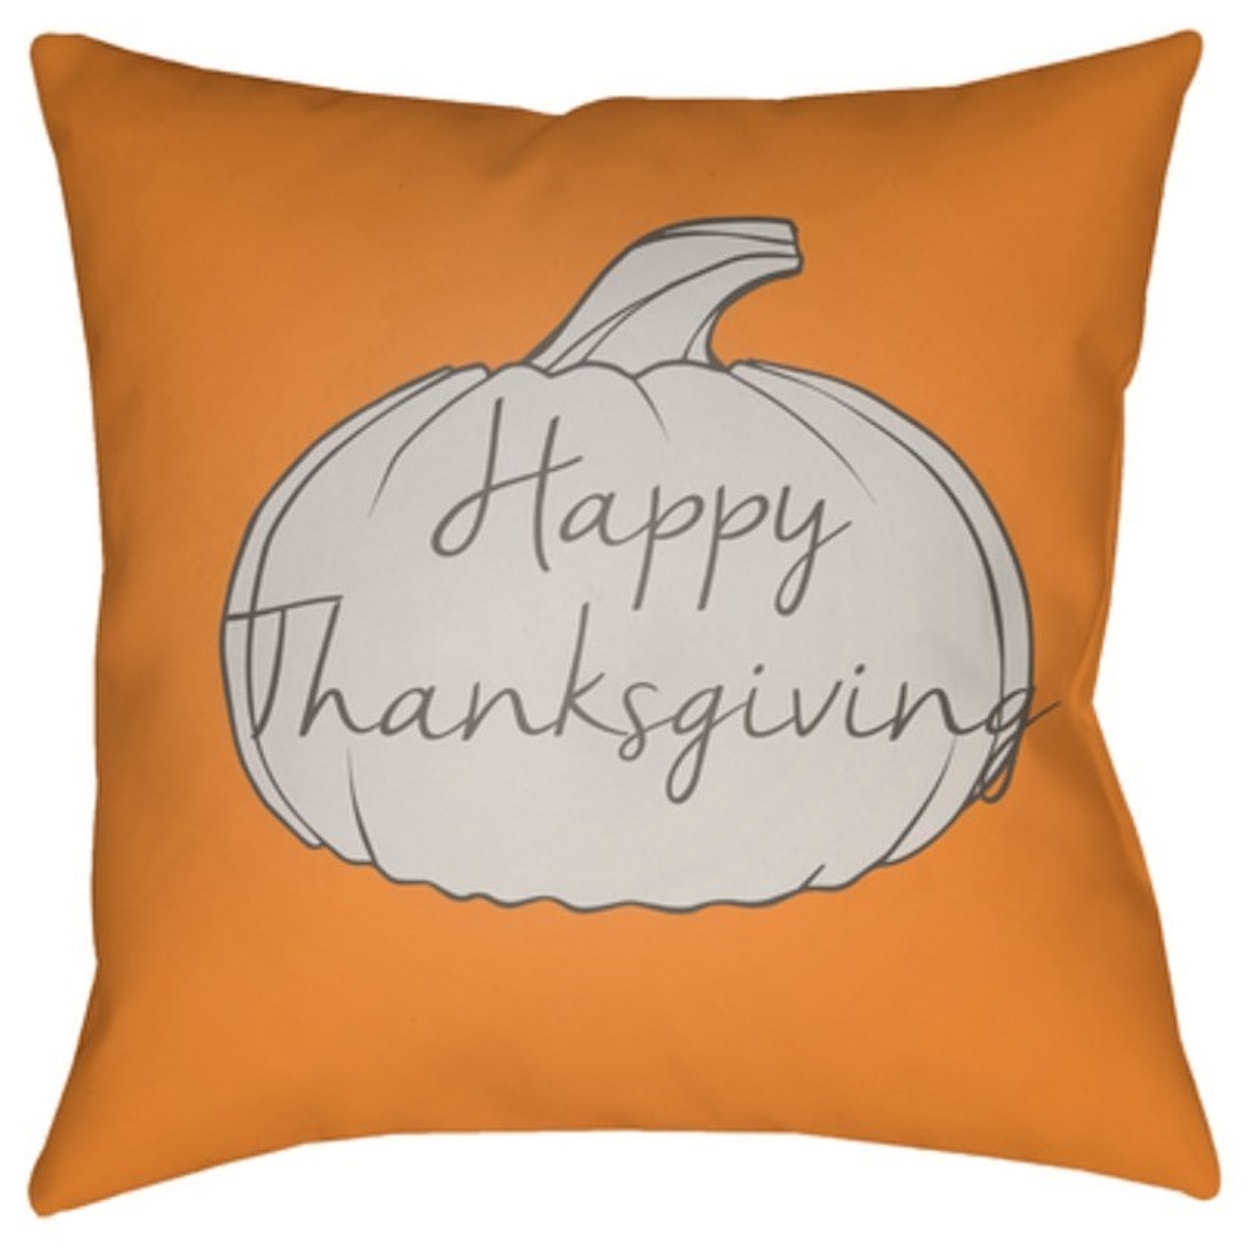 Surya Happy Thanksgiving Pillow